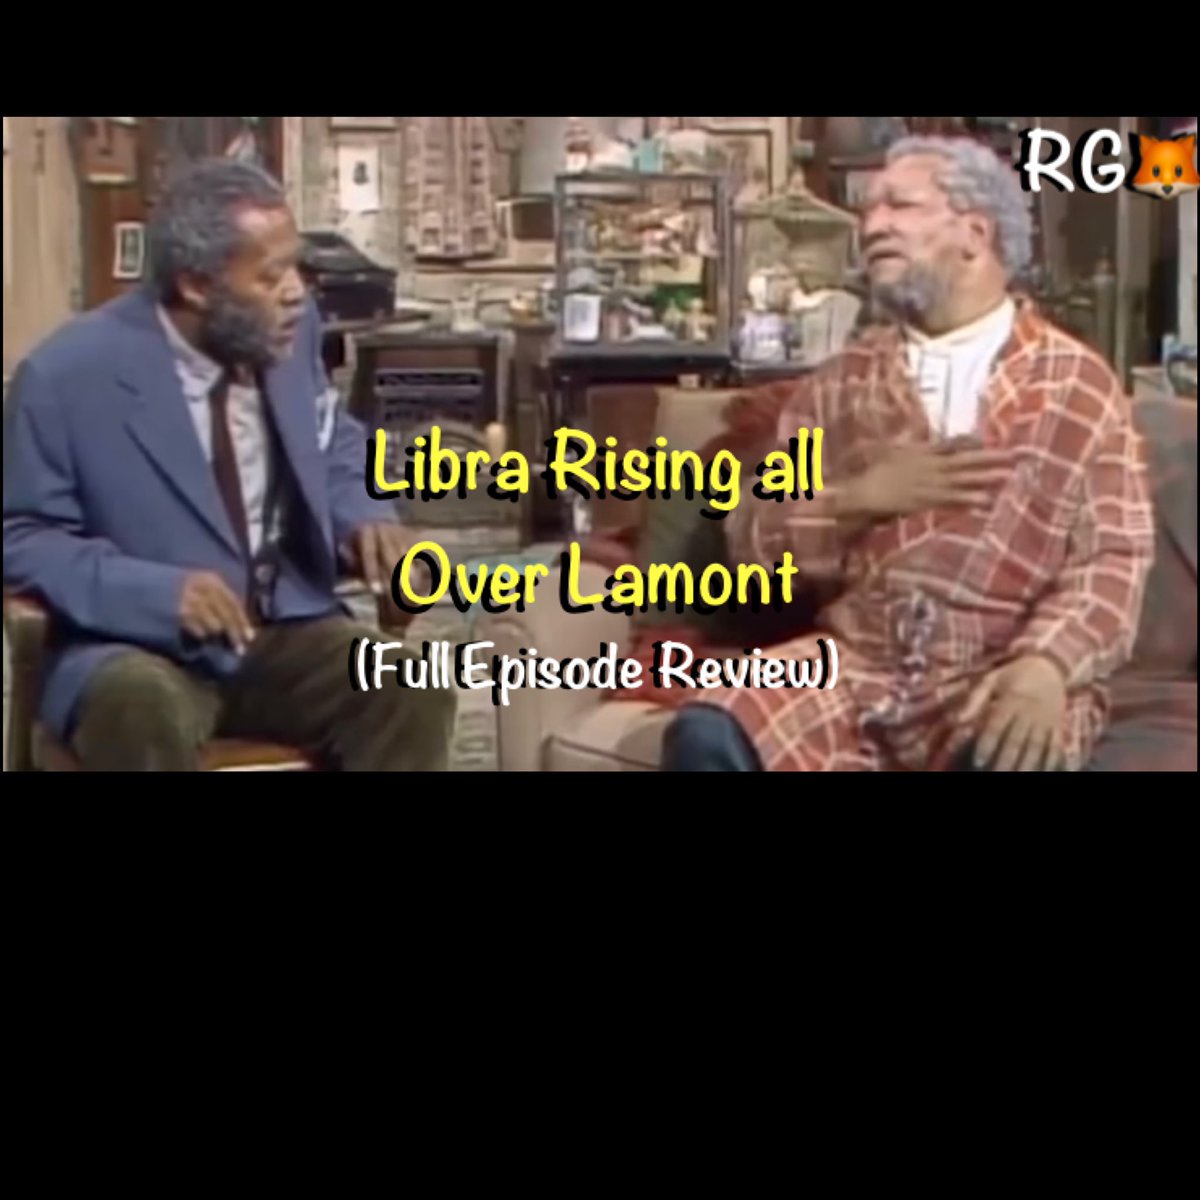 Sanford and Son | Libra Rising all over Lamont  (Full Episode Review)
youtu.be/NLz6Yxh9rmI
#SanfordAndSon #classictv #episodes